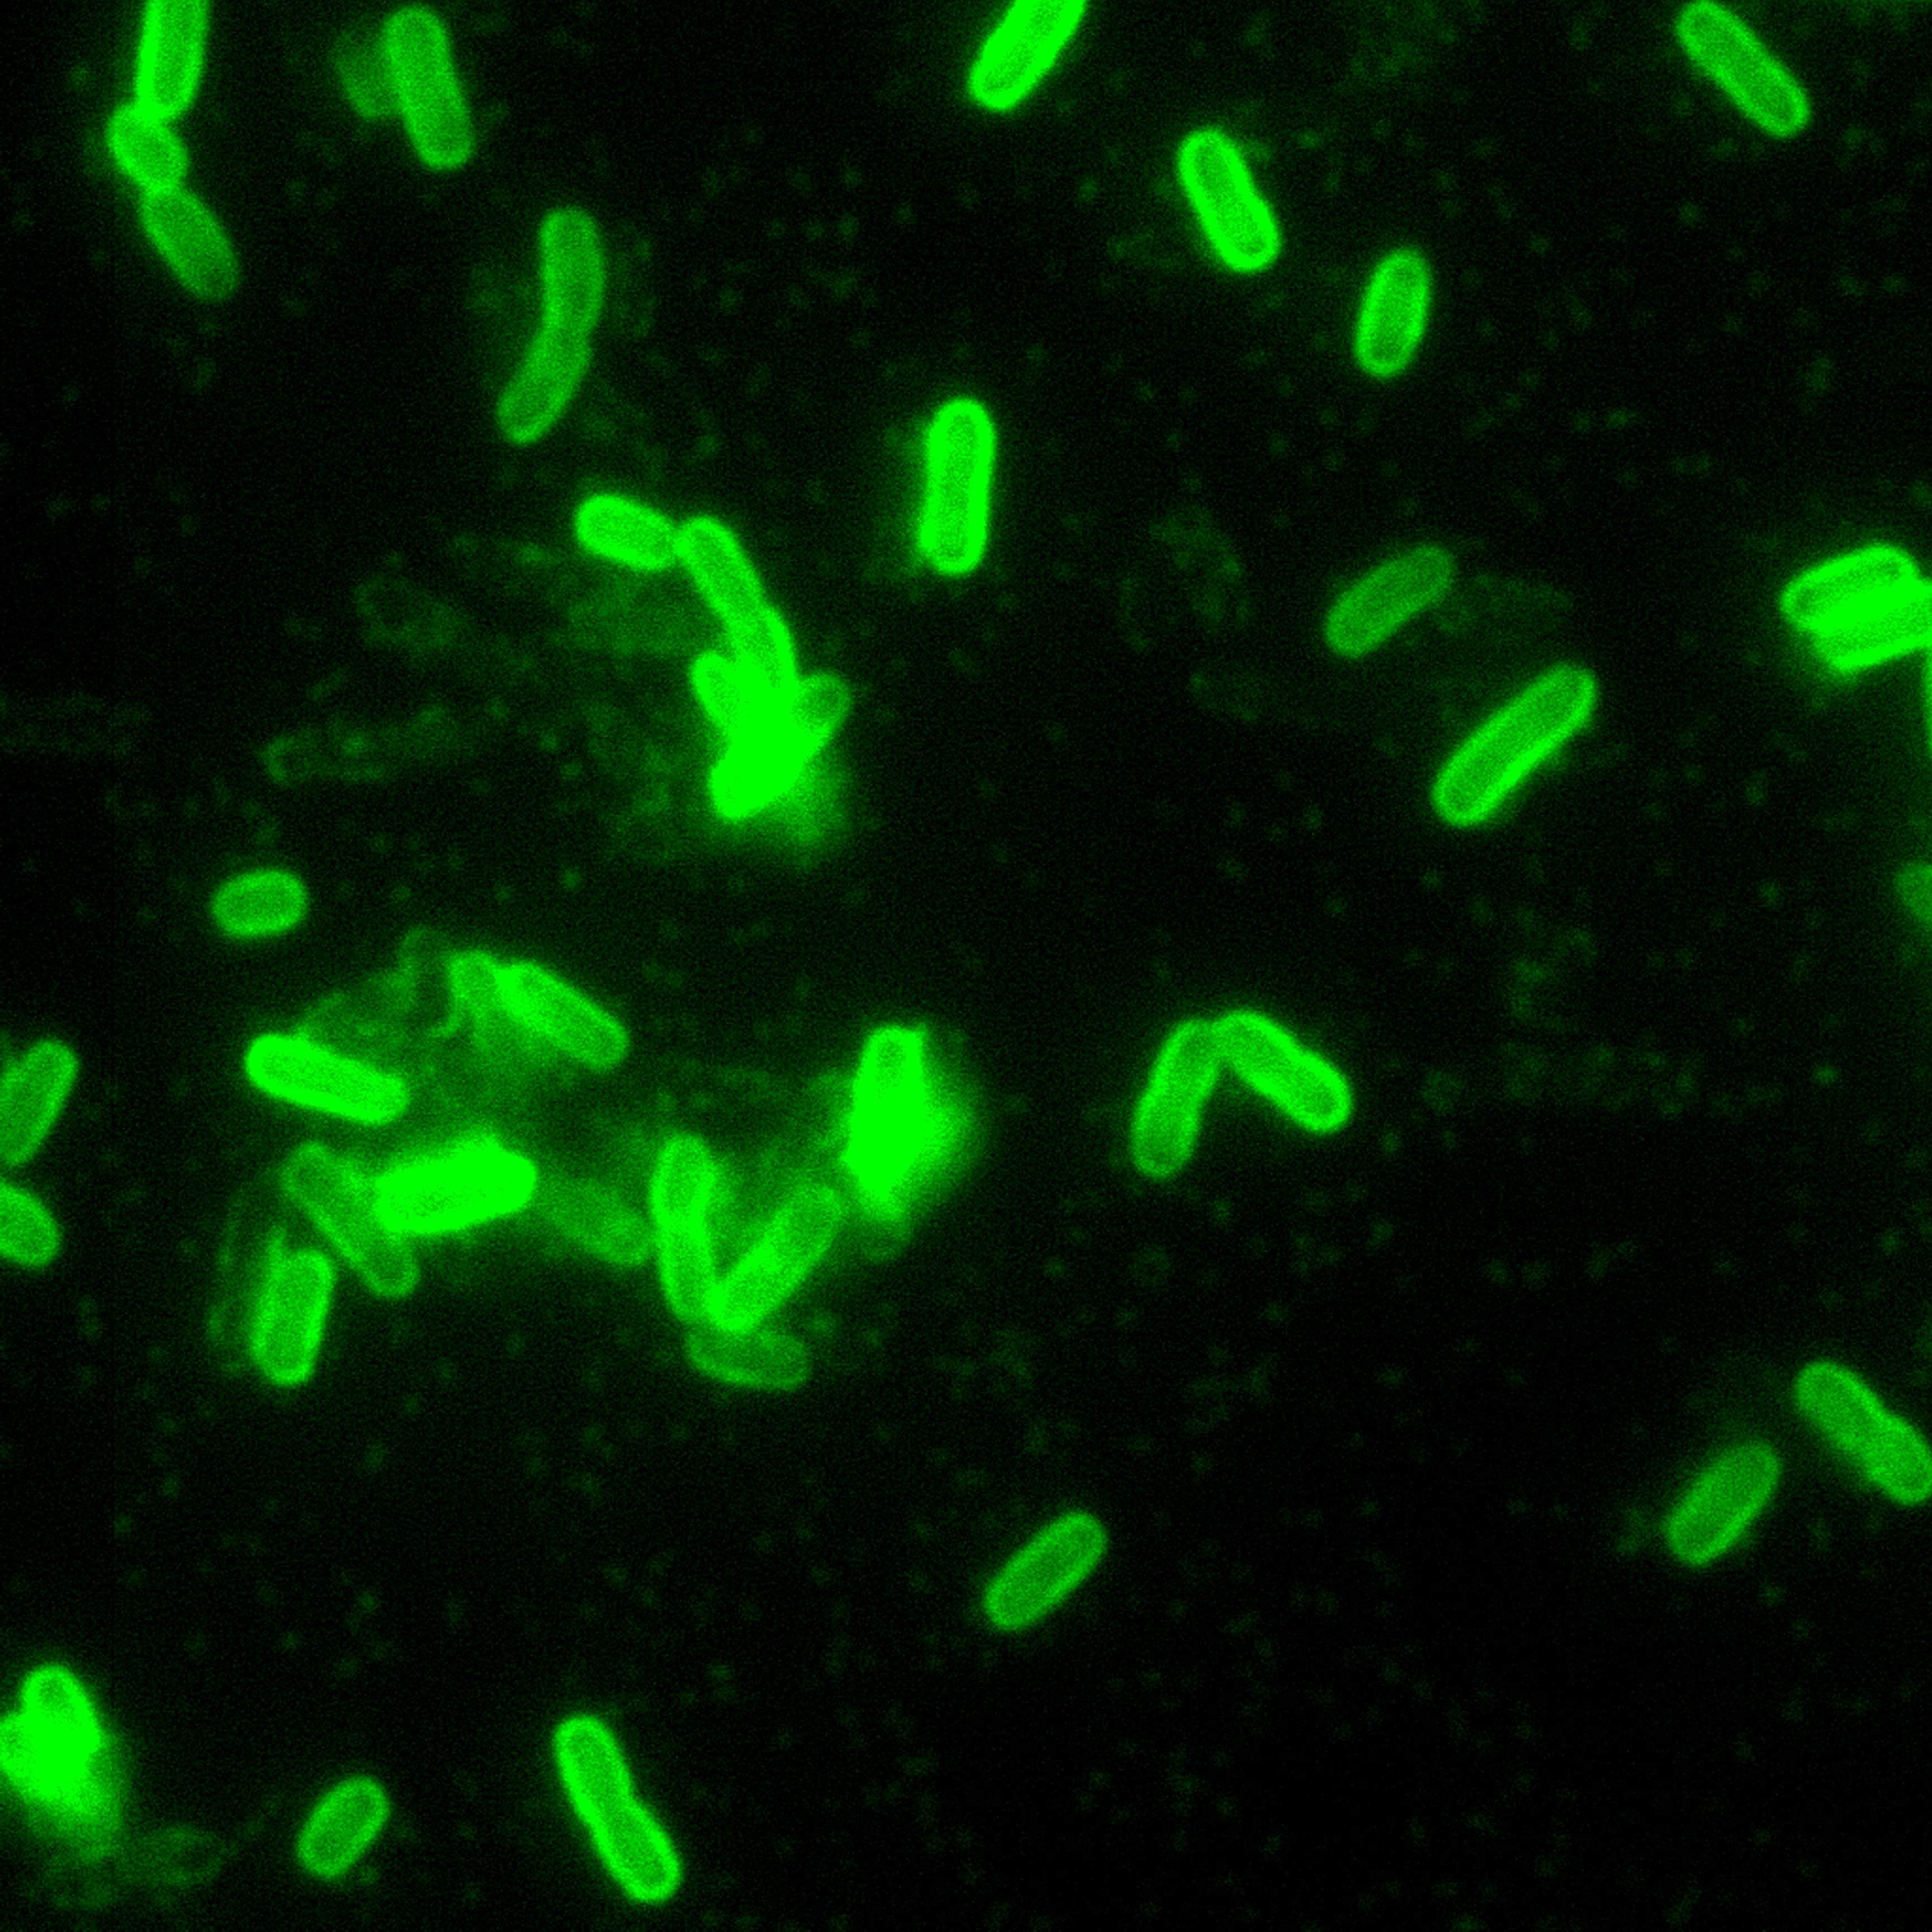 yersinia-pestis-direct-fluorescent-antibody-stain-dfa-200x-magnification.jpg